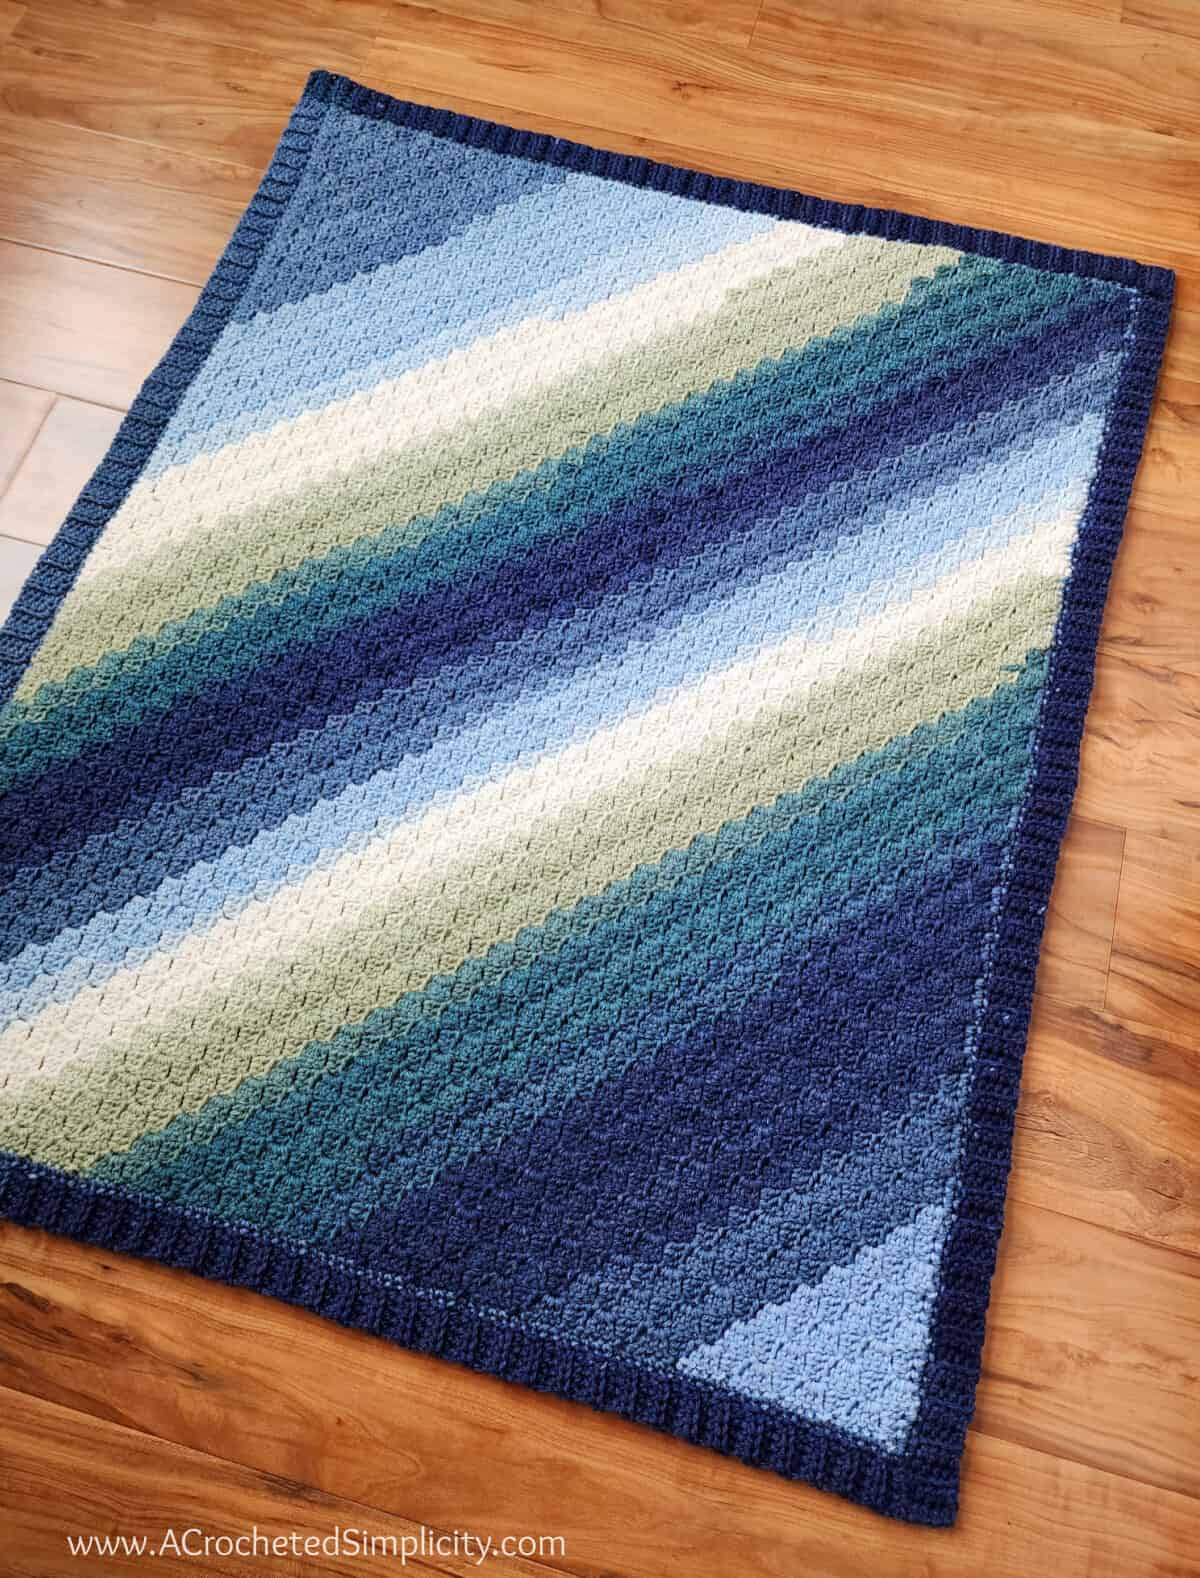 C2C crochet rectangle baby blanket in Mandala Baby yarn laying on a wood floor.